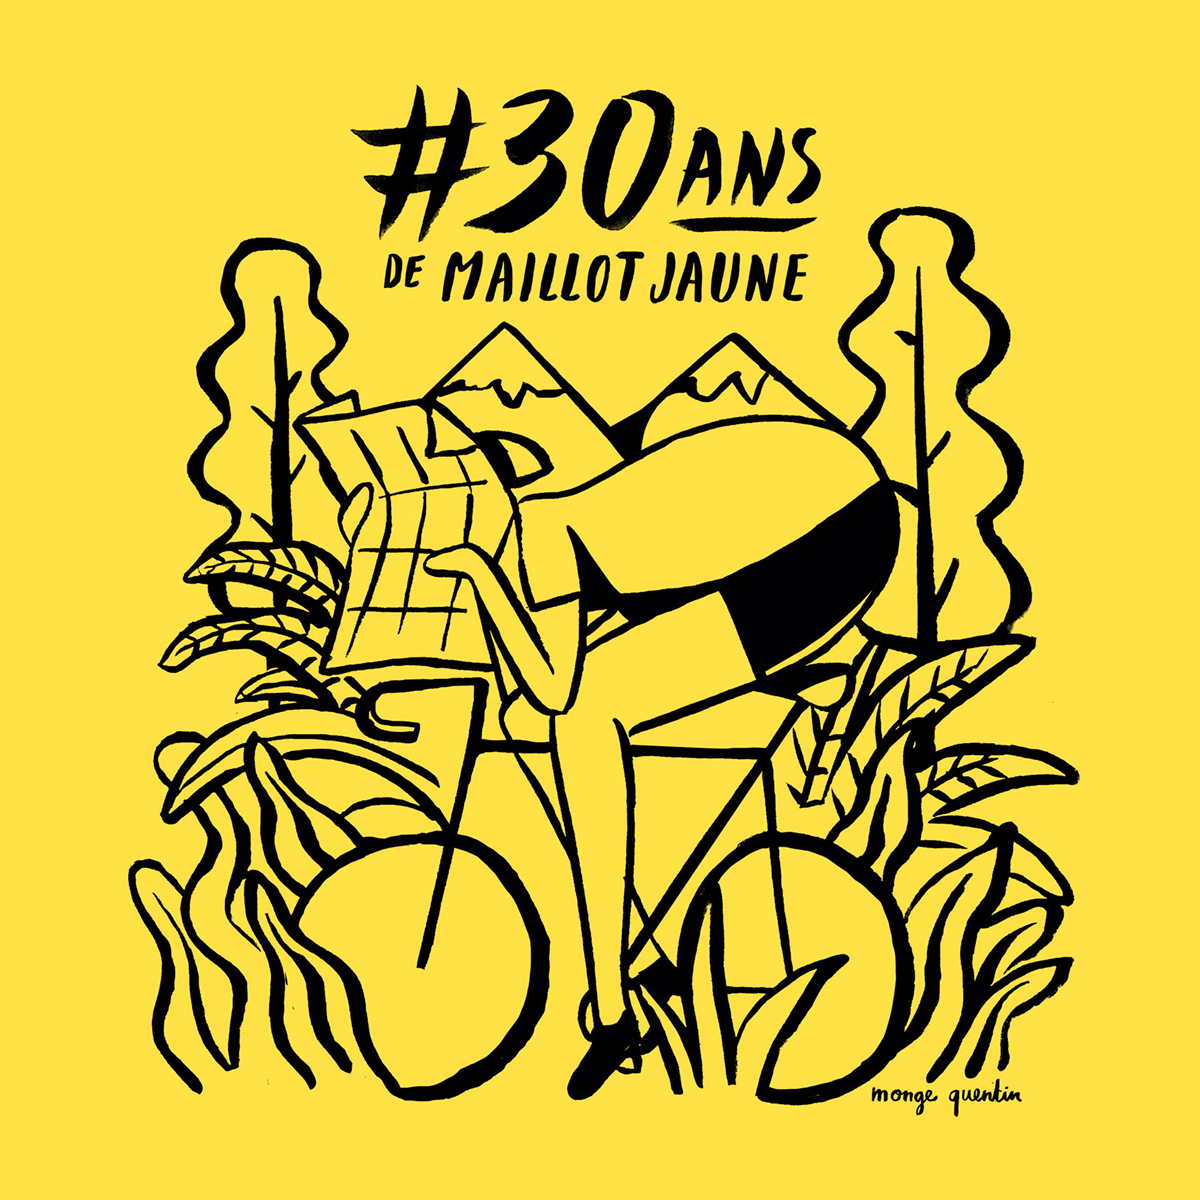 yellow Bike courses Competition 30 years Tour de France LCL Maillot Jaune  30AnsDeMaillotJaune Cyclisme